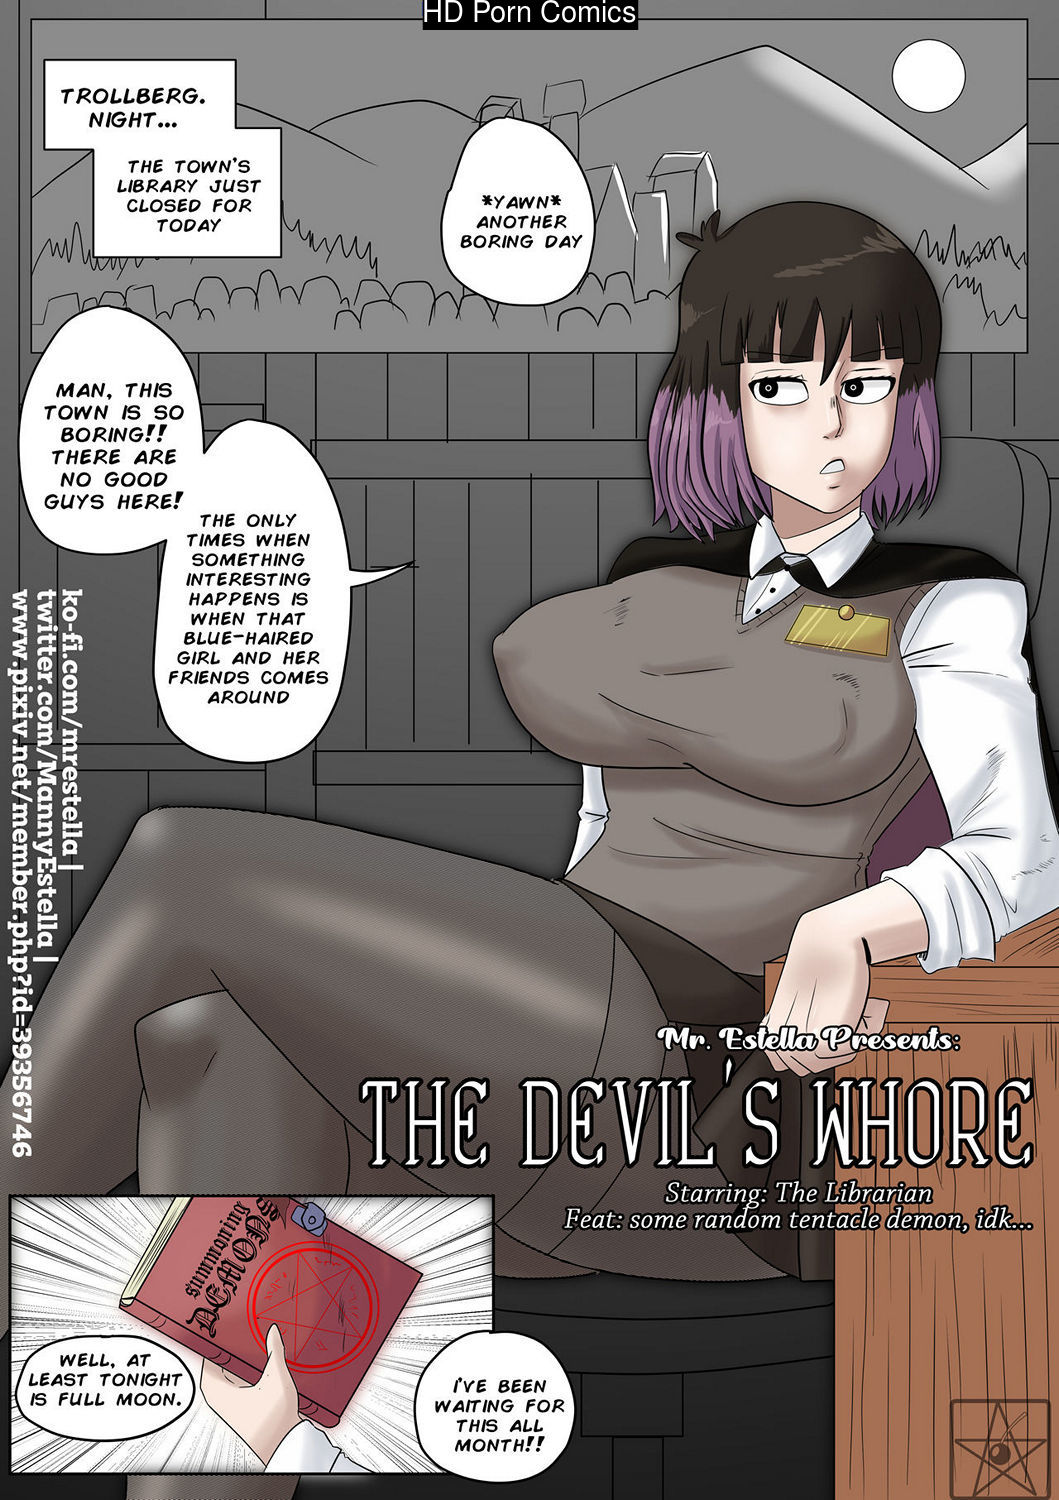 The Devil's Whore comic porn | HD Porn Comics